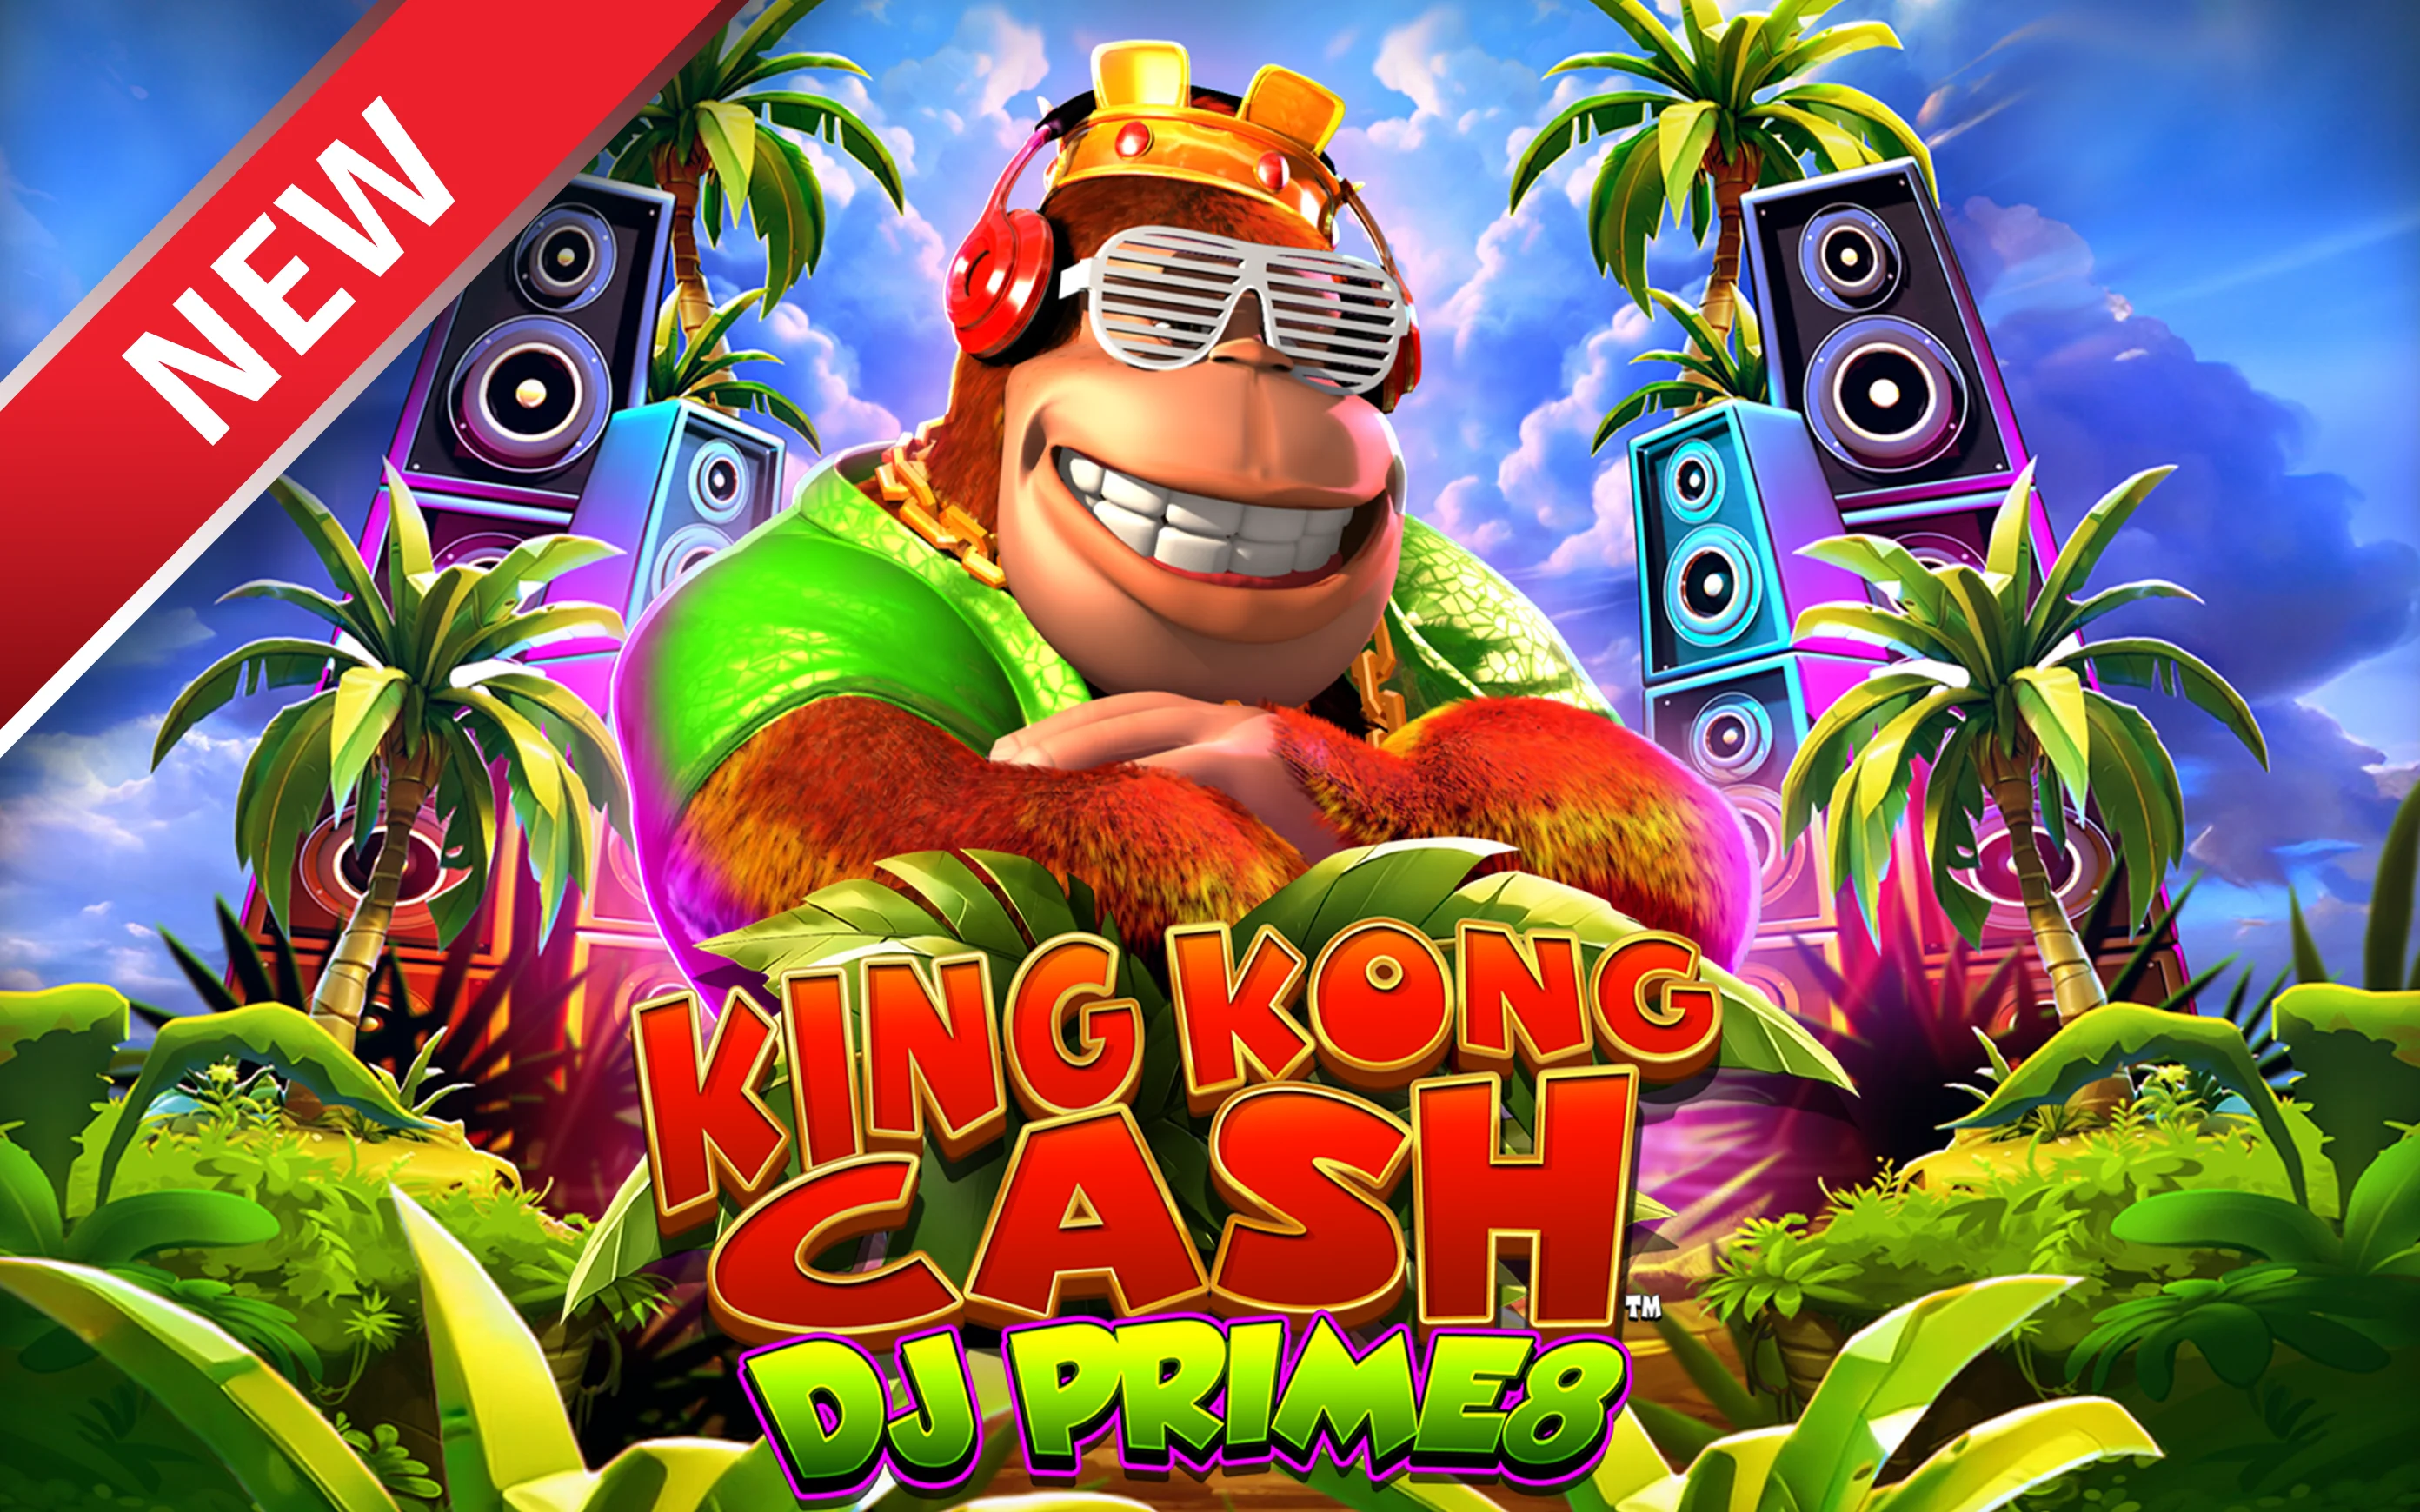 Jogue King Kong Cash DJ Prime8 no casino online Starcasino.be 